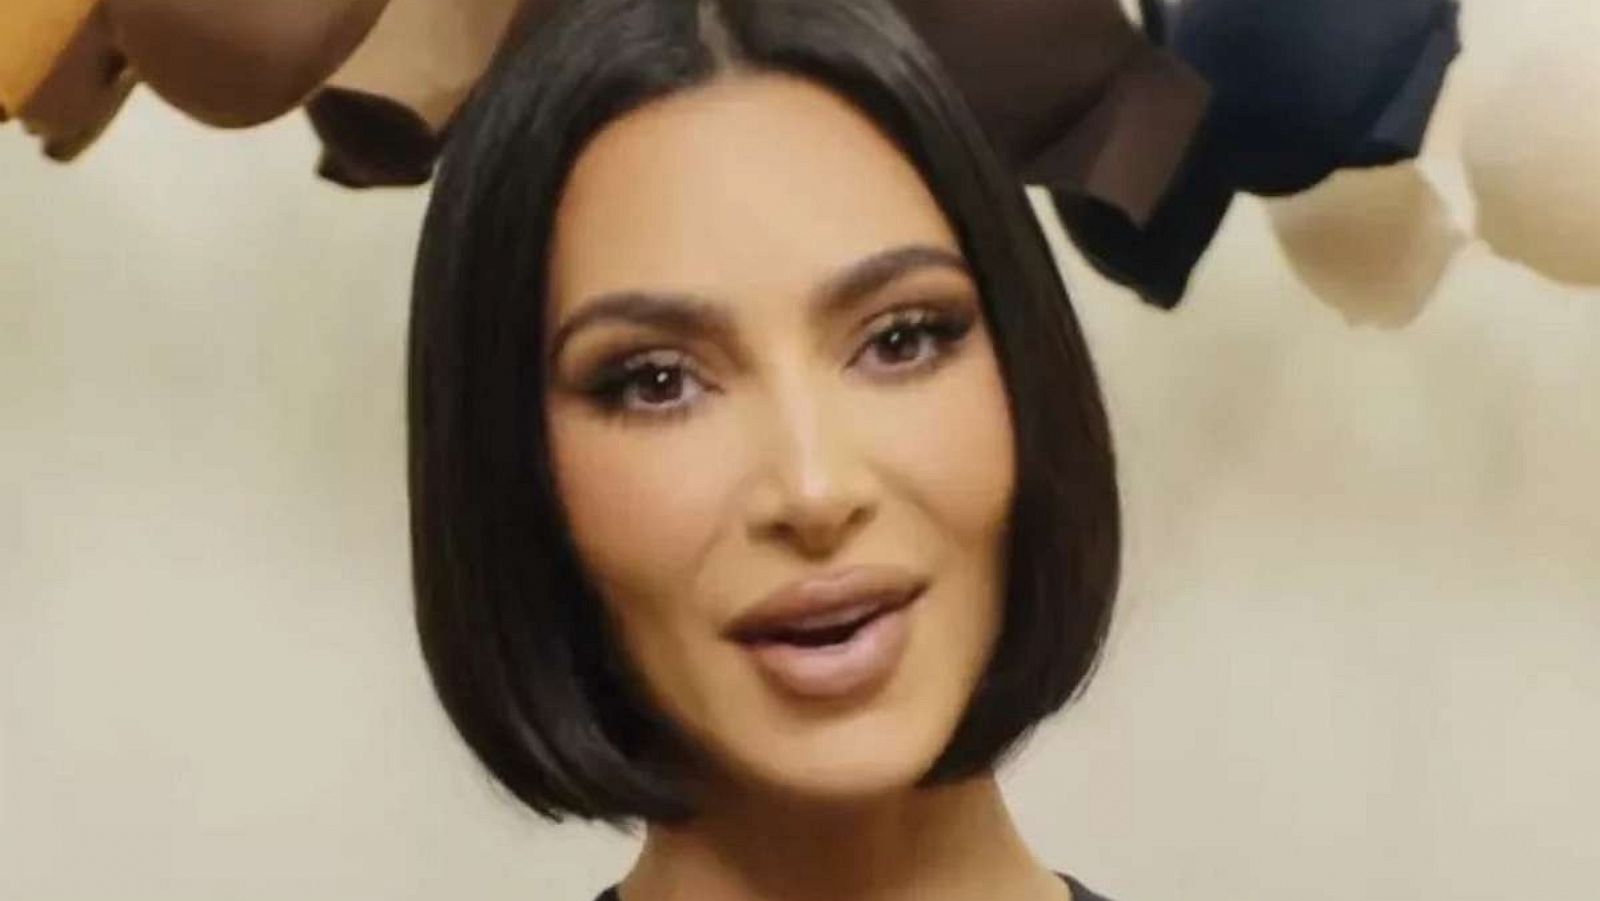 Kim Kardashian sports blunt bob in new SKIMS campaign video - Good Morning  America